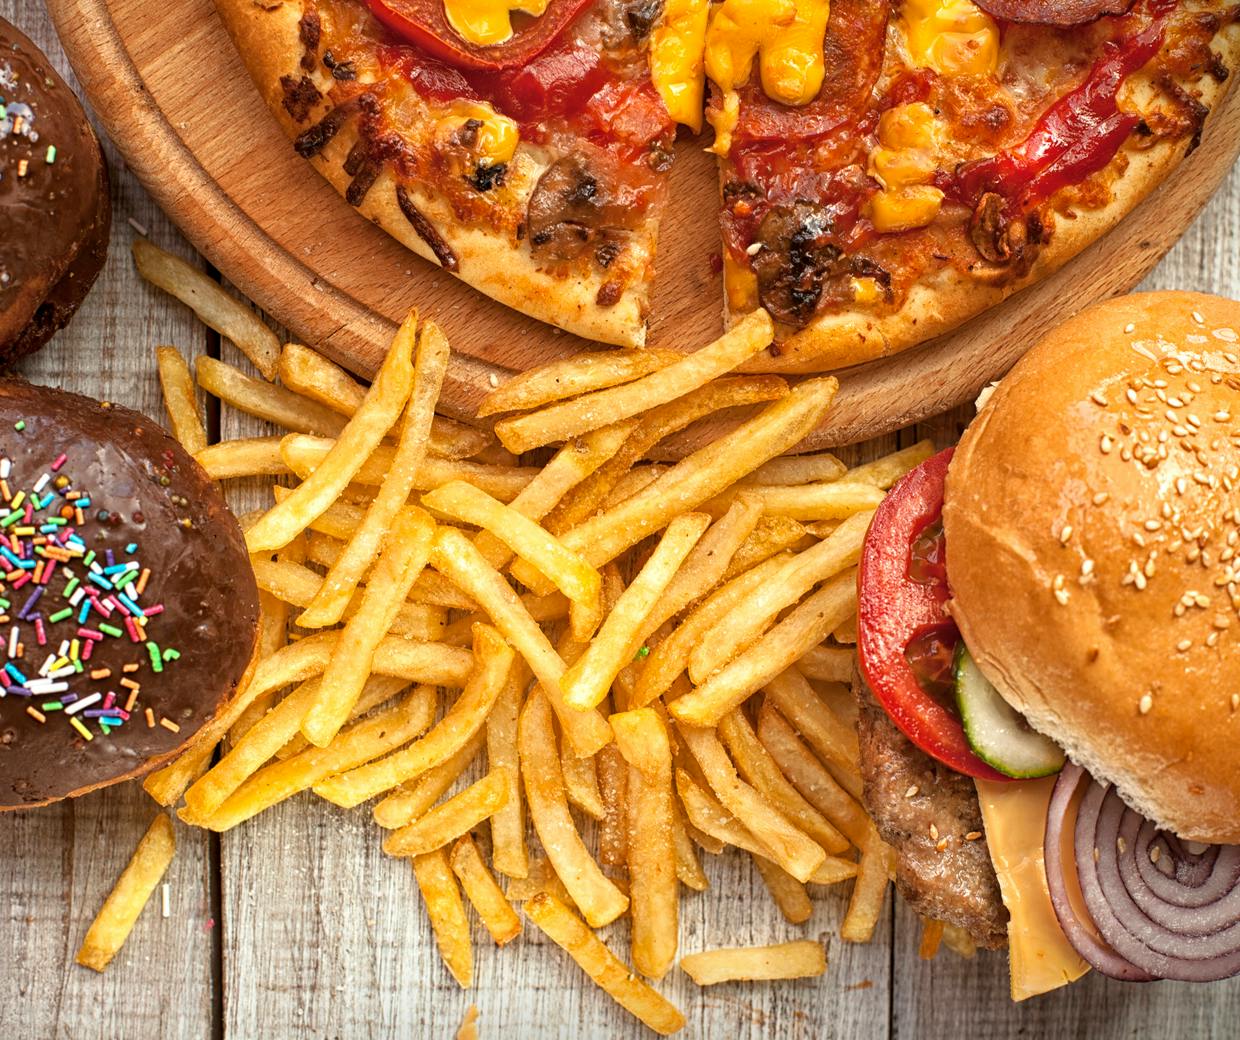 Brands found targeting junk food ads at children online